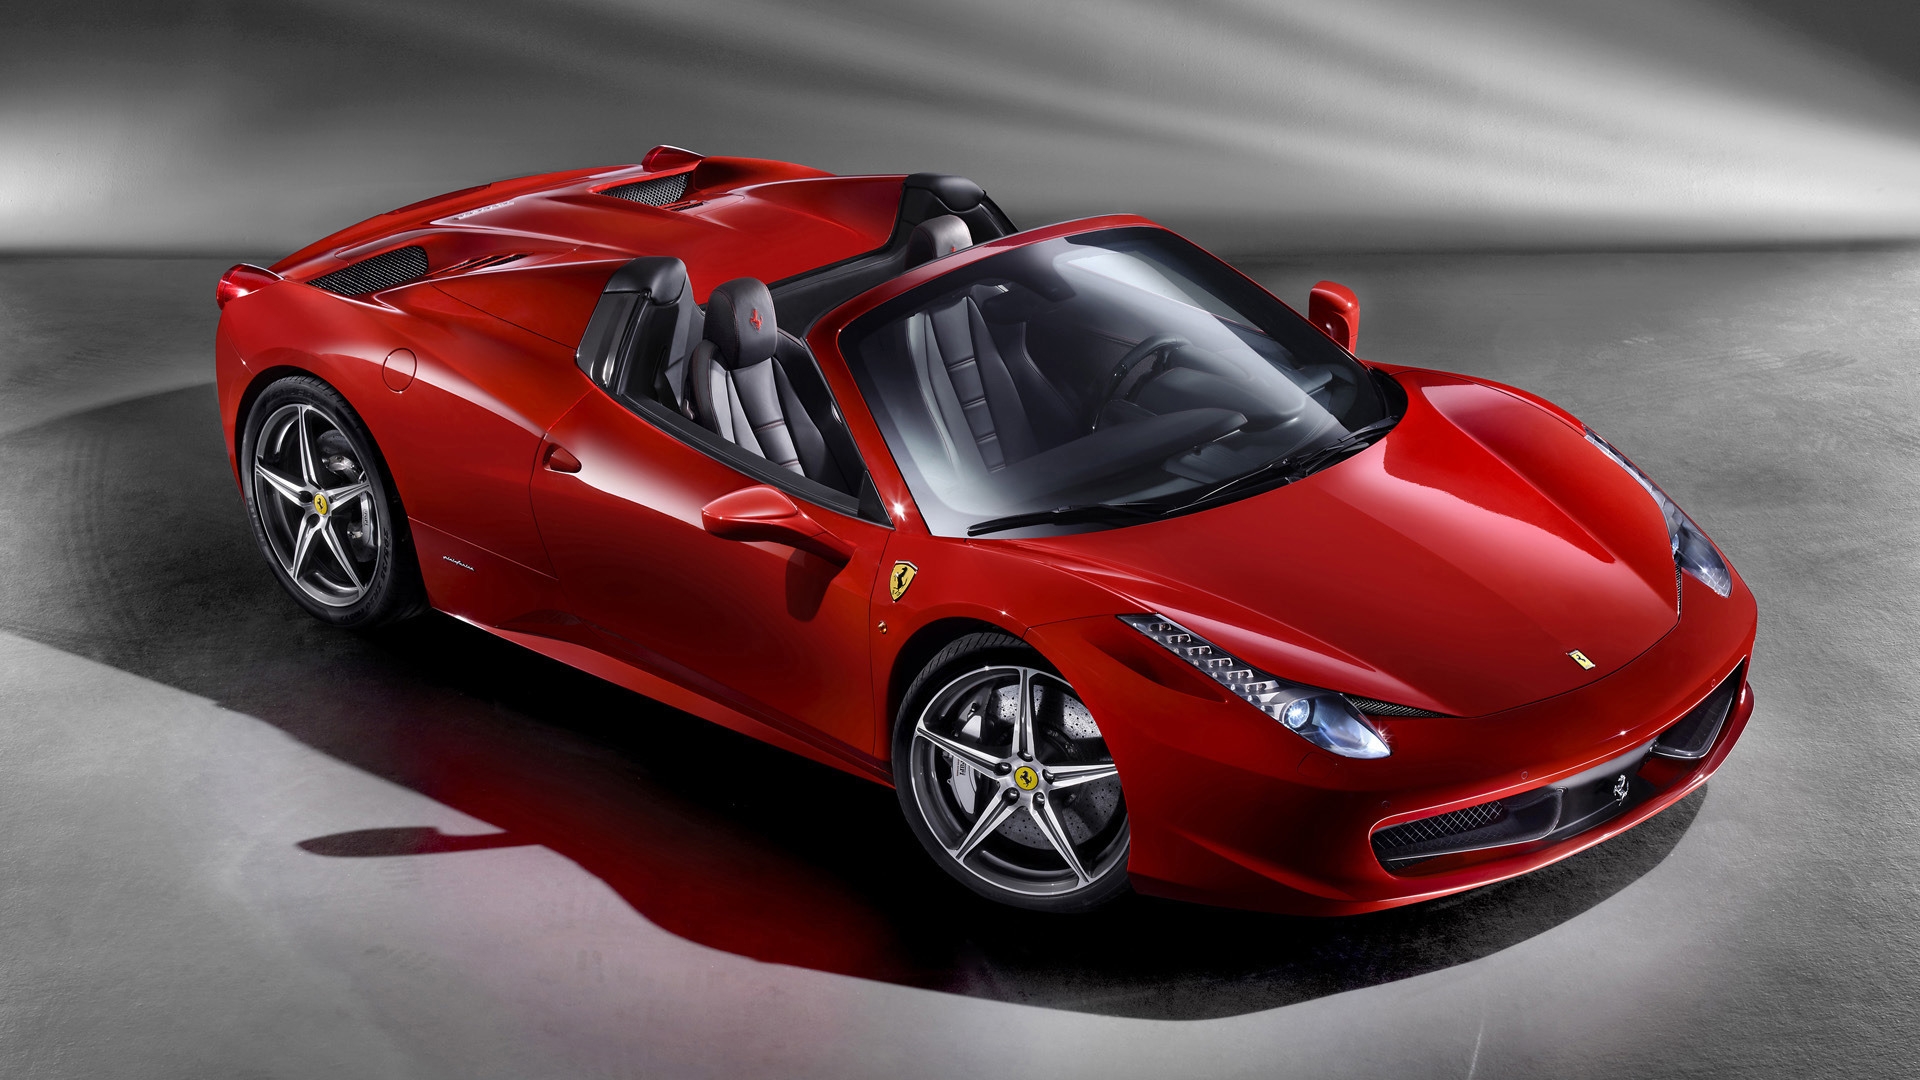 2012 Ferrari 458 Spider Studio for 1920 x 1080 HDTV 1080p resolution